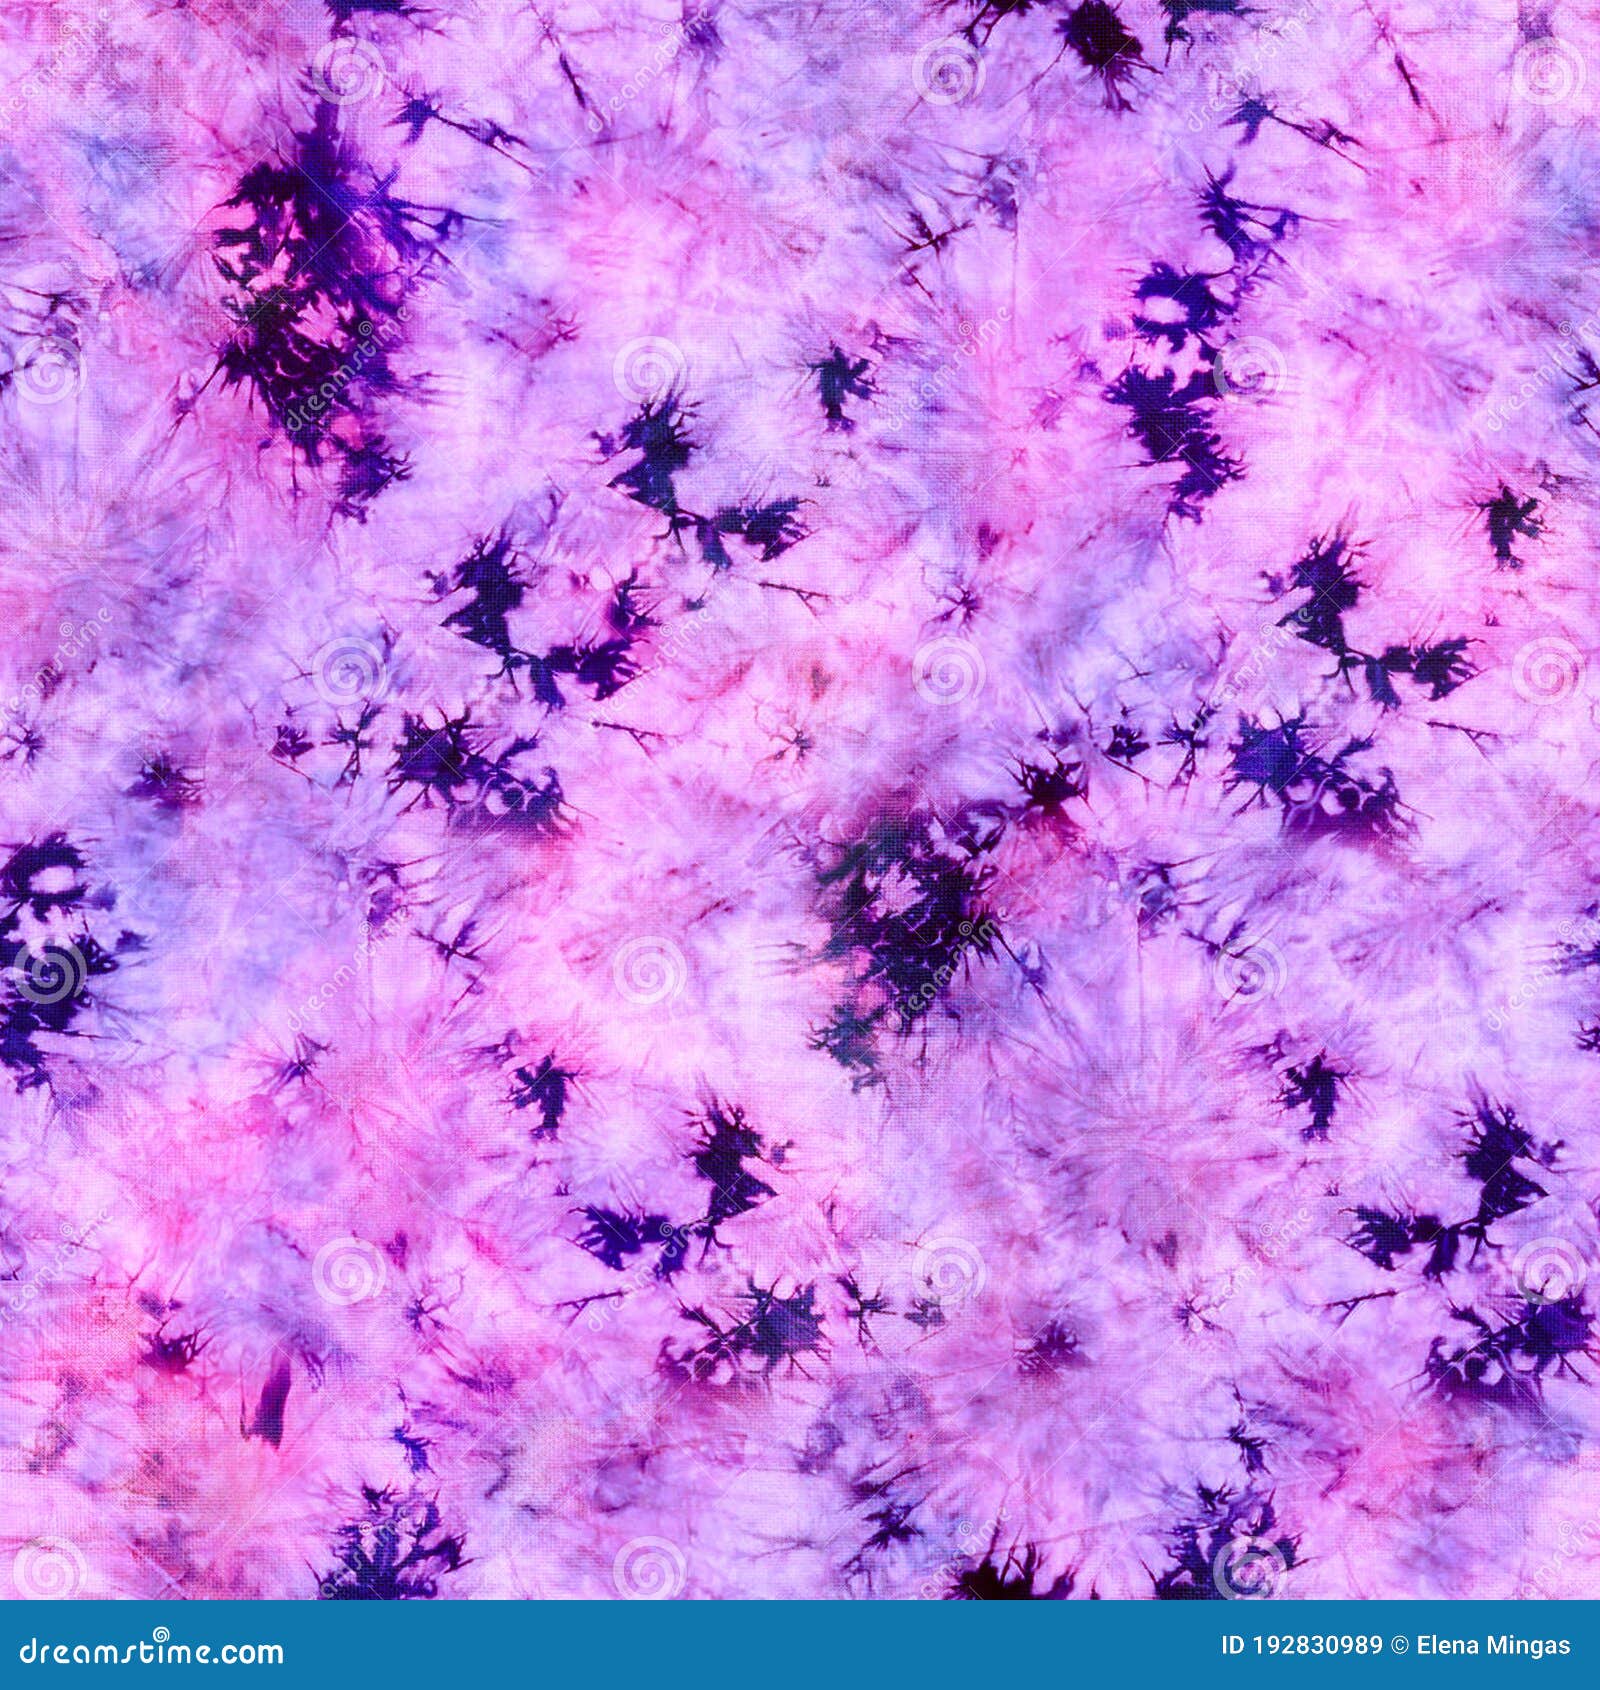 tonal purple abstract fractal tie dye print